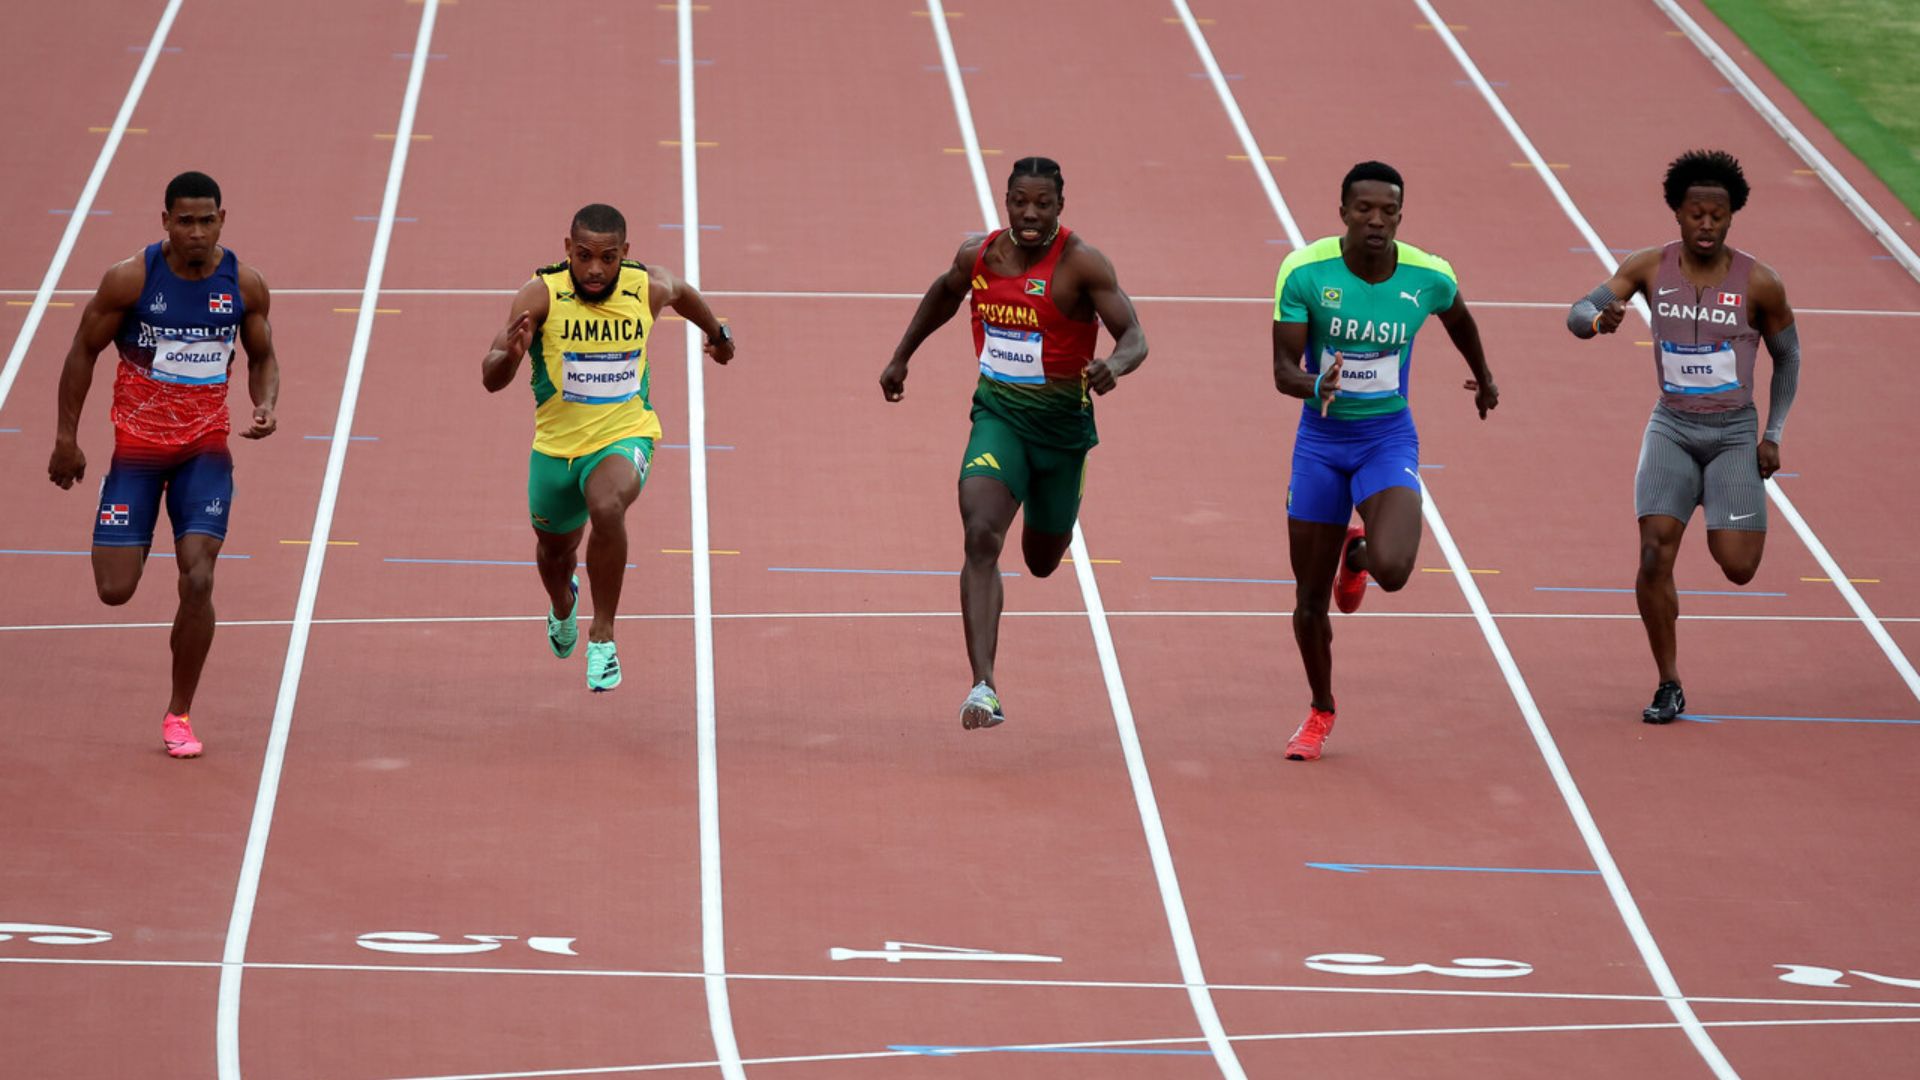 Brasil registers two finalists in the male's 100 meters